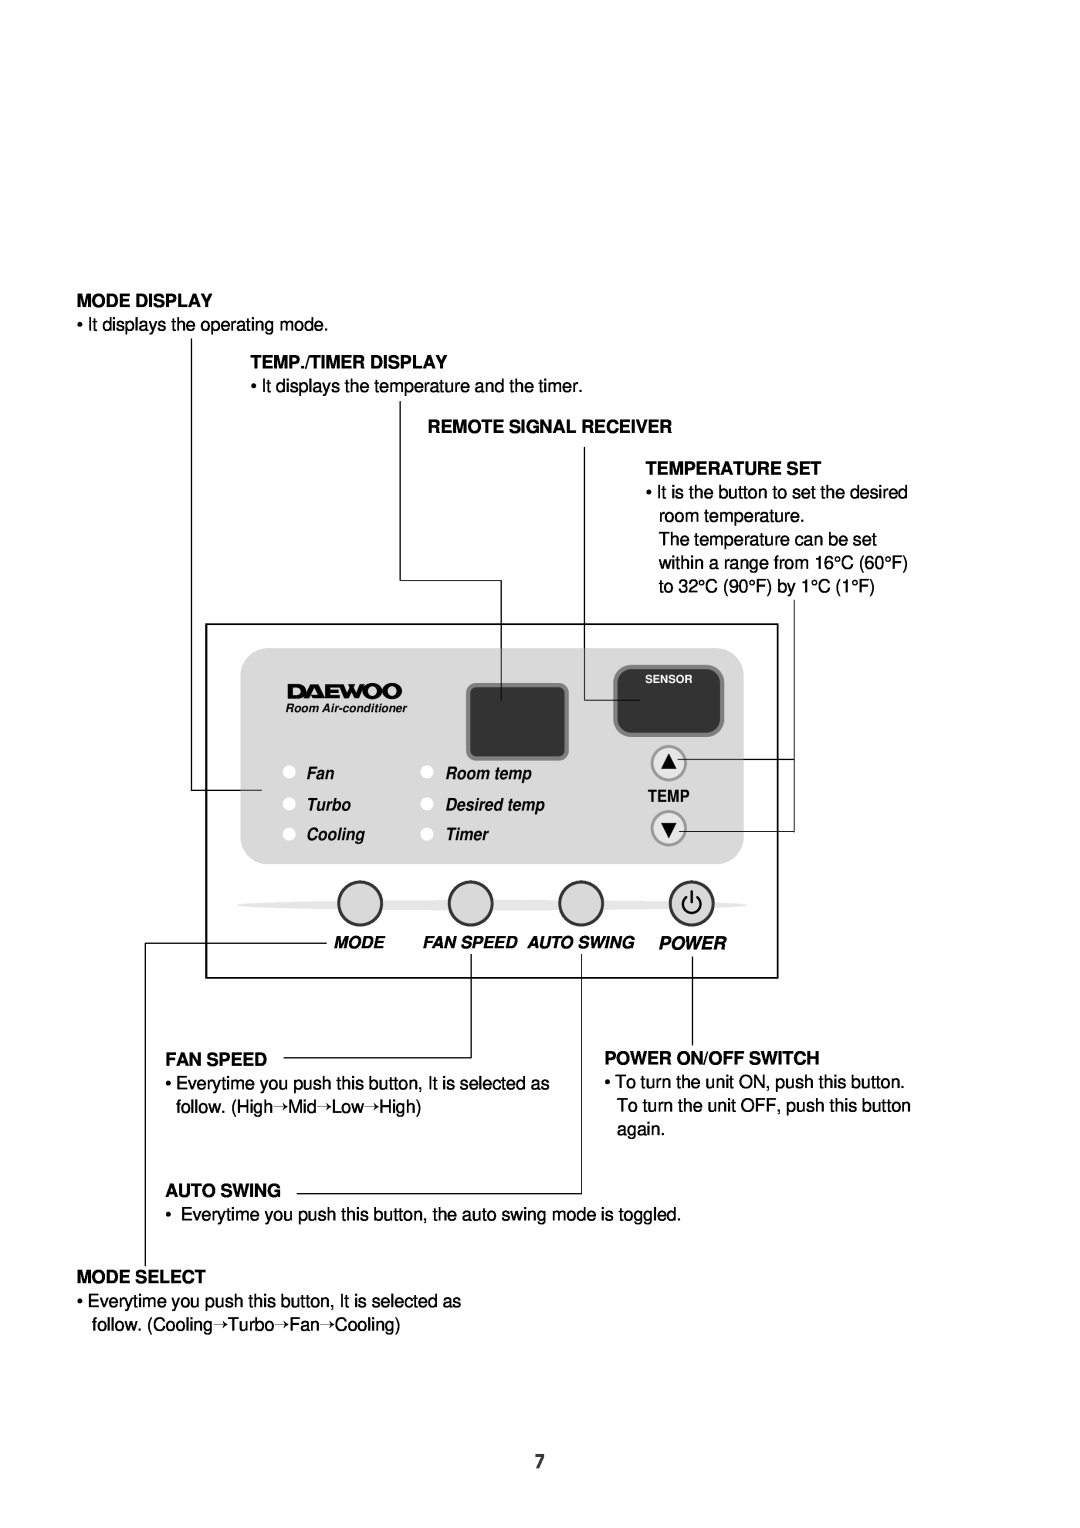 Daewoo DWC-121R Mode Display, Temp./Timer Display, Remote Signal Receiver Temperature Set, Room temp, Turbo, Desired temp 